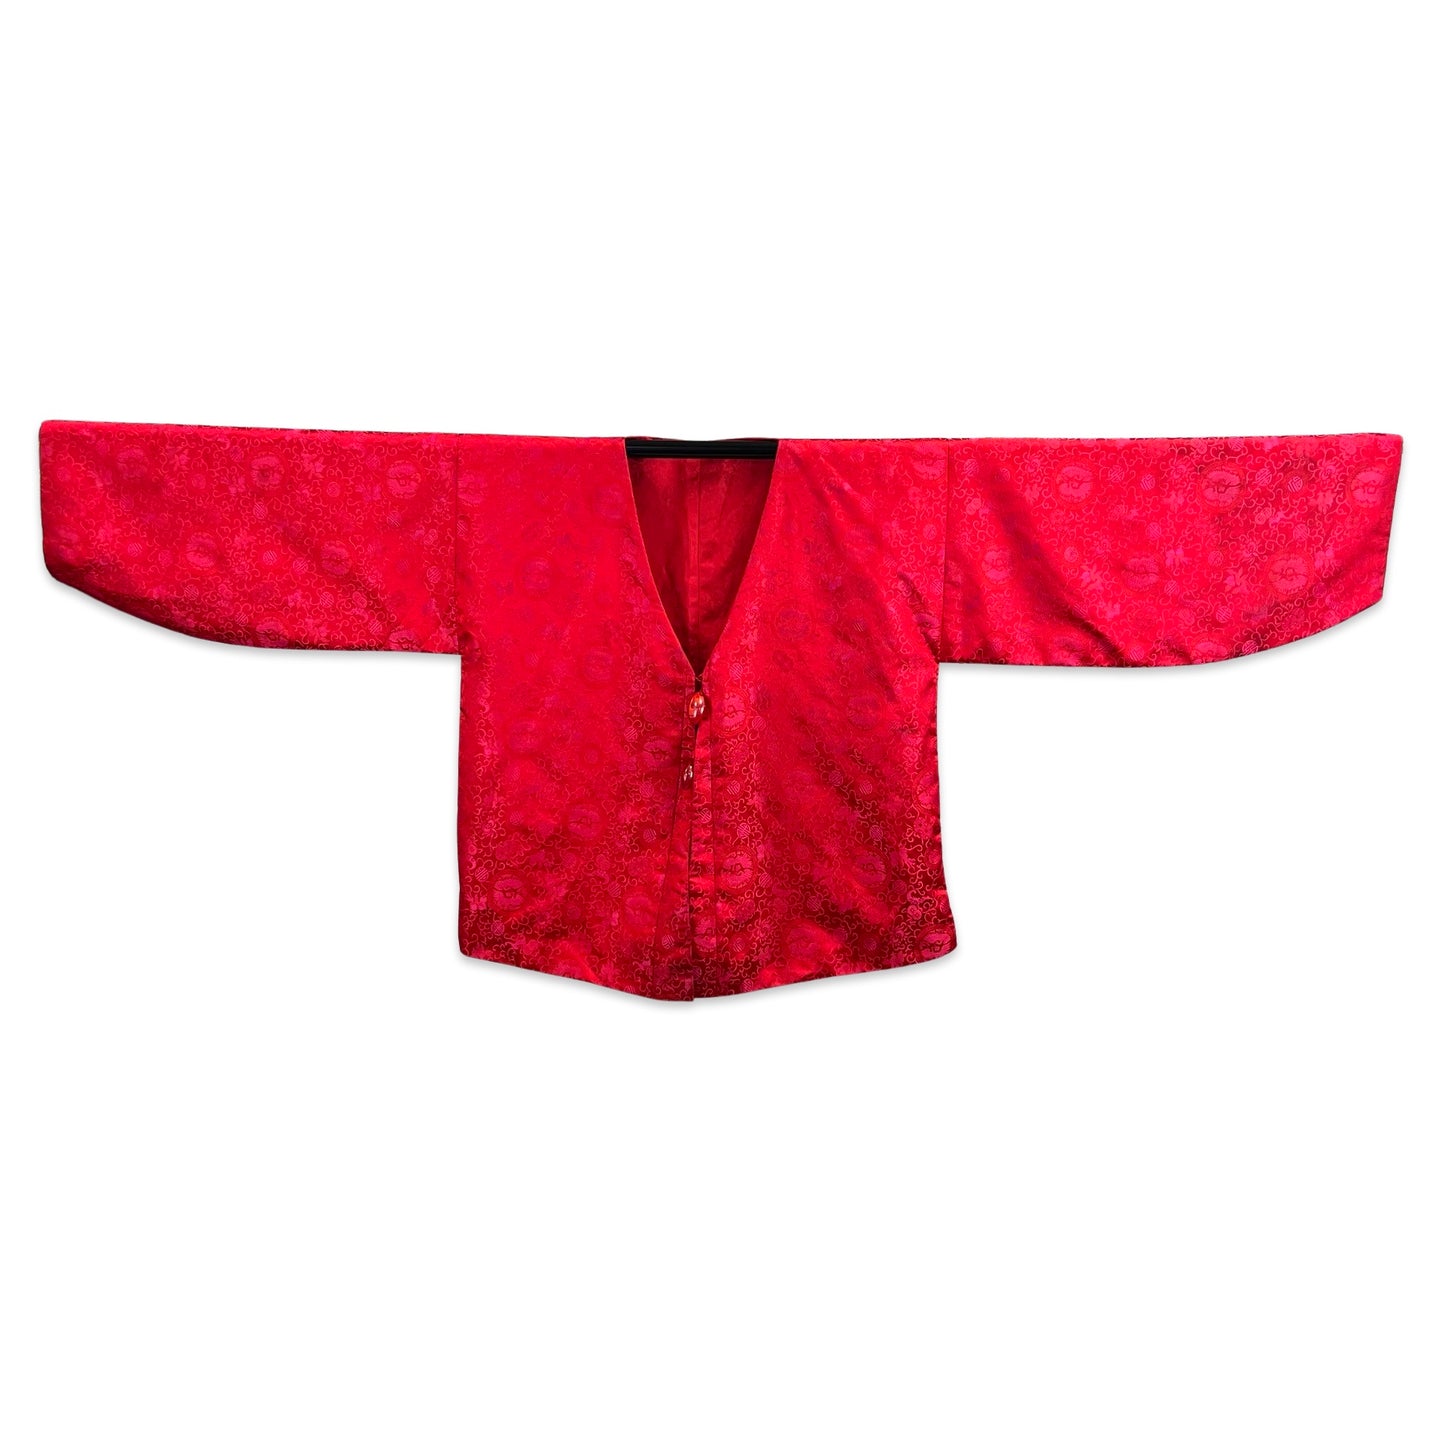 Vintage Ornate Kimono Tunic Top Red Pink 12 14 16